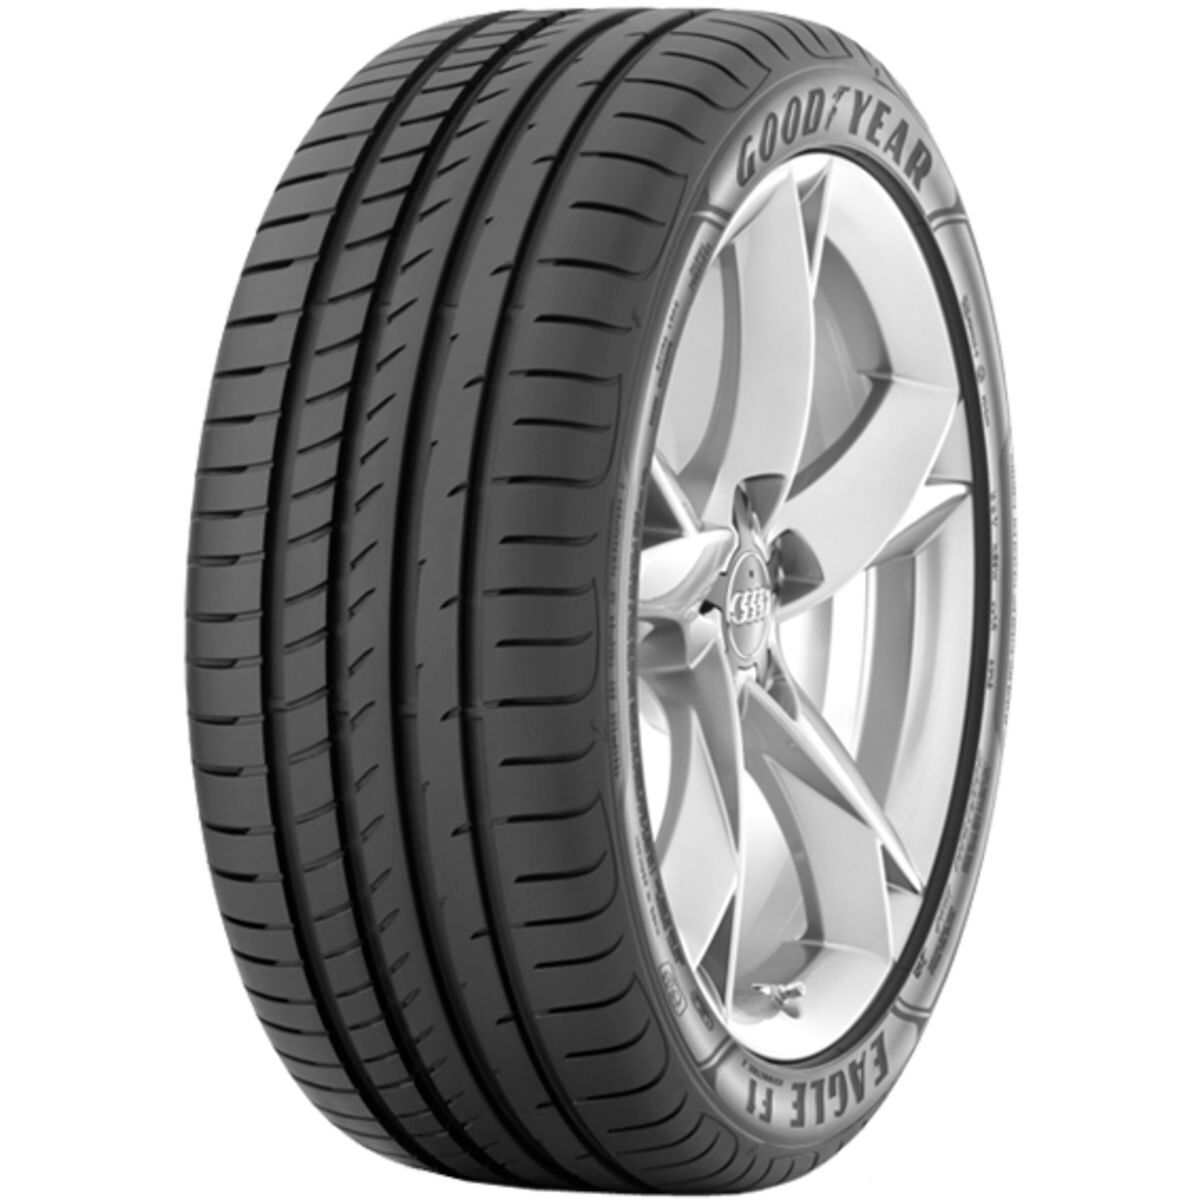 Neumáticos de verano GOODYEAR Eagle F1 Asymmetric 2 235/35R20 88Y